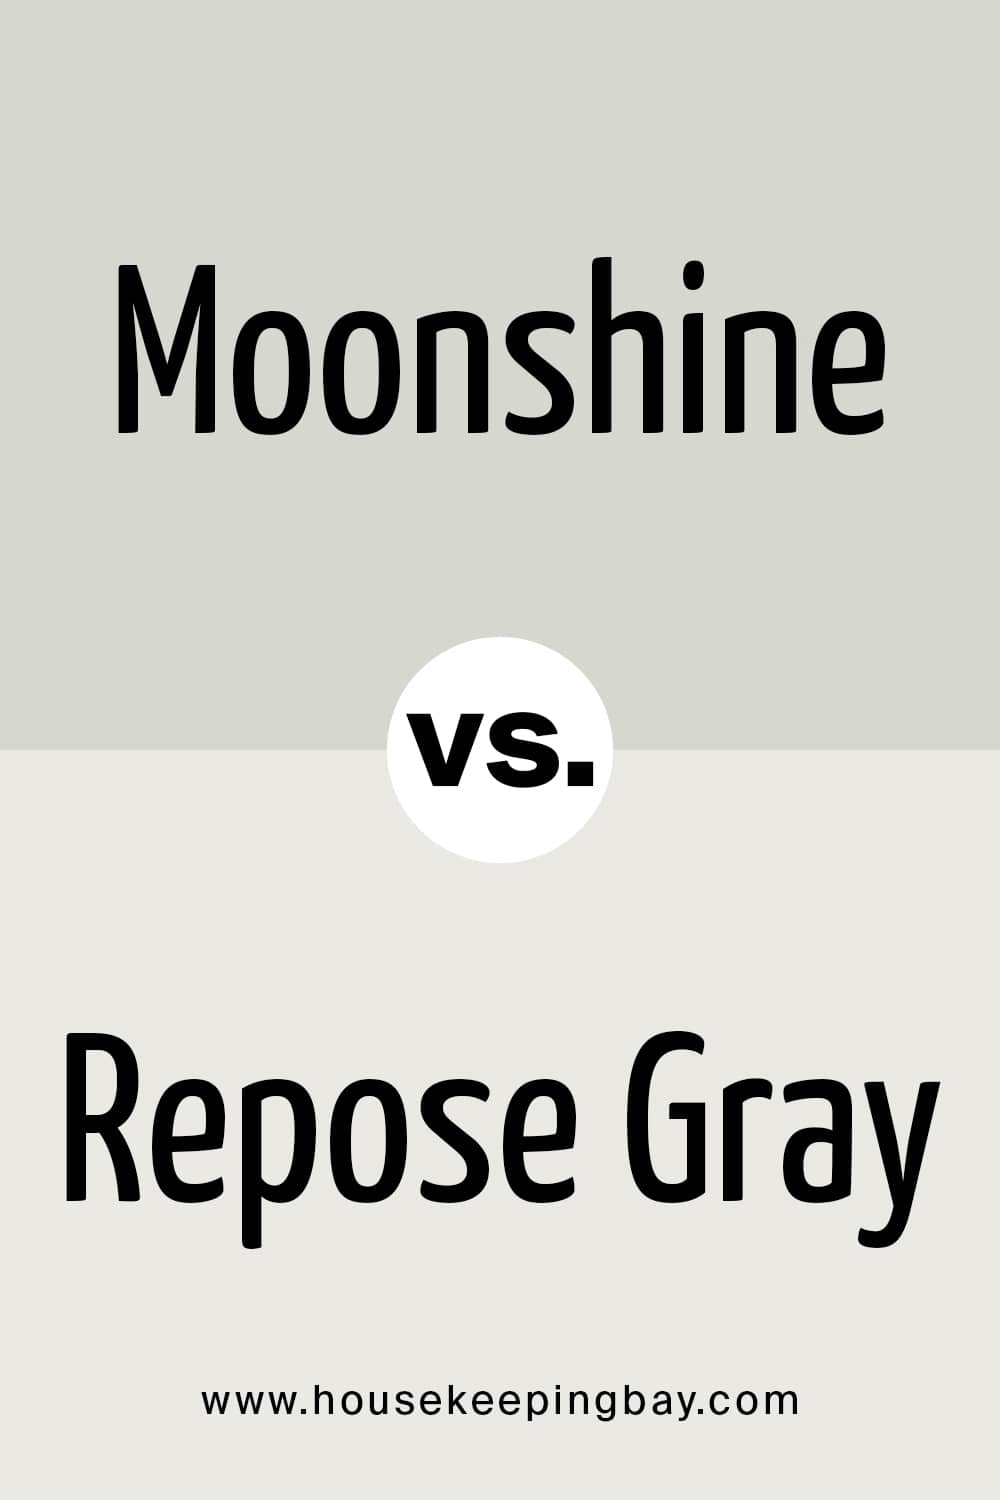 Moonshine vs Repose Gray